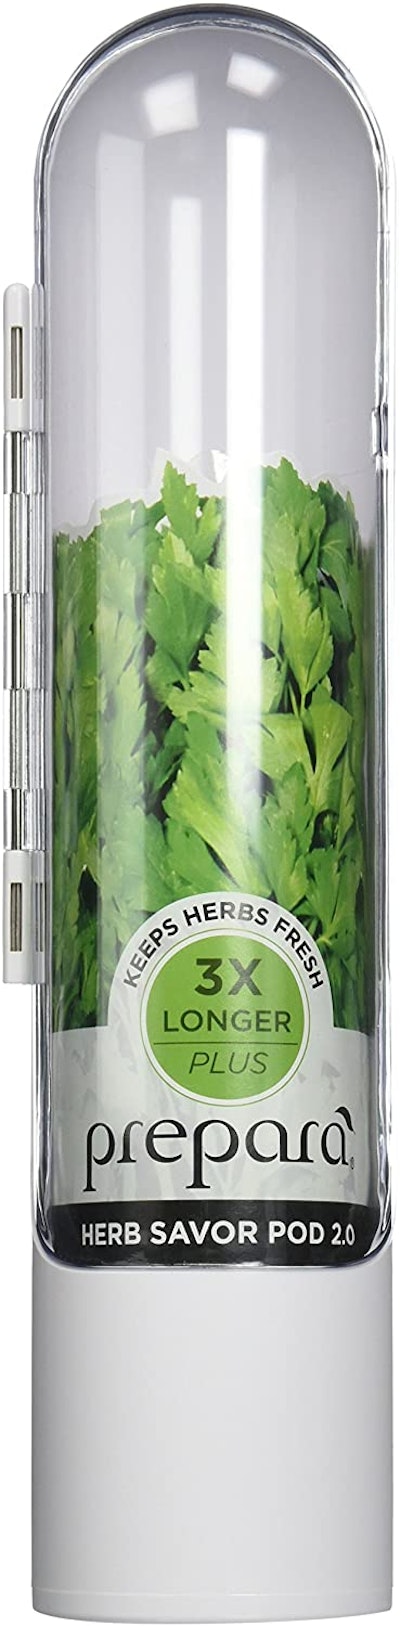 Prepara Herb Savor Pod 2.0